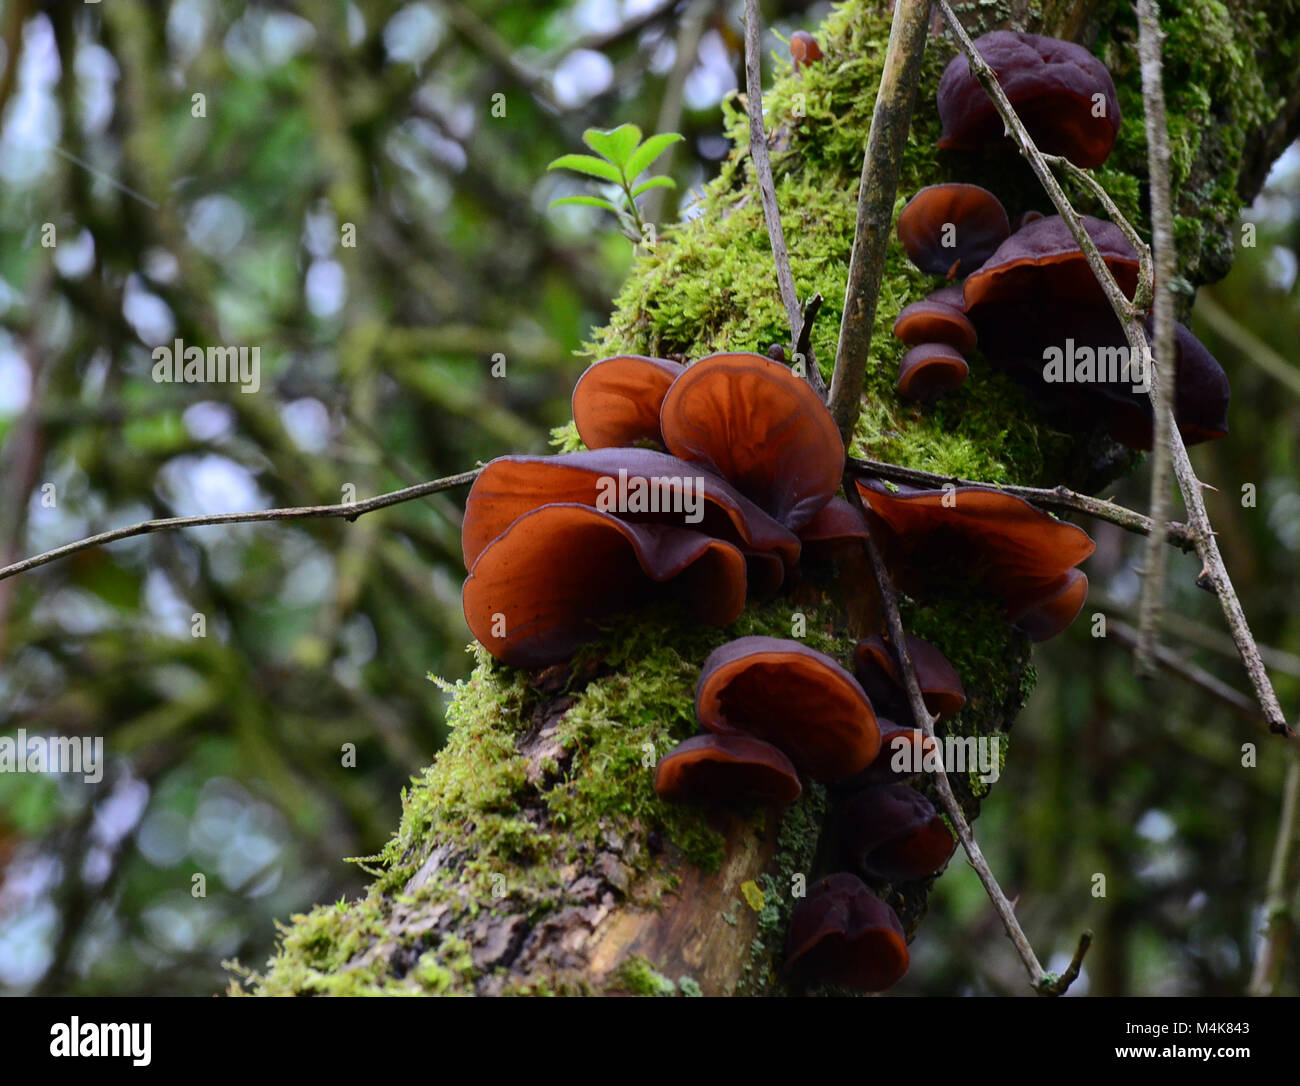 Jew's ear fungus / wood ear / jelly ear fungus on moss covered tree, uk Stock Photo